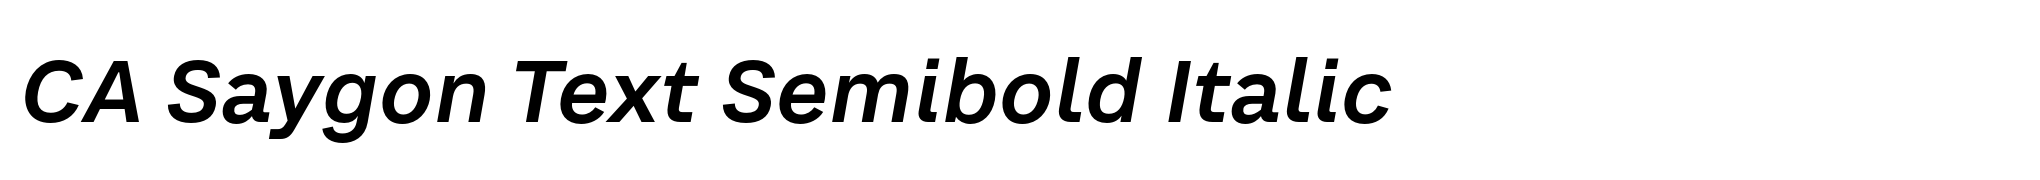 CA Saygon Text Semibold Italic image